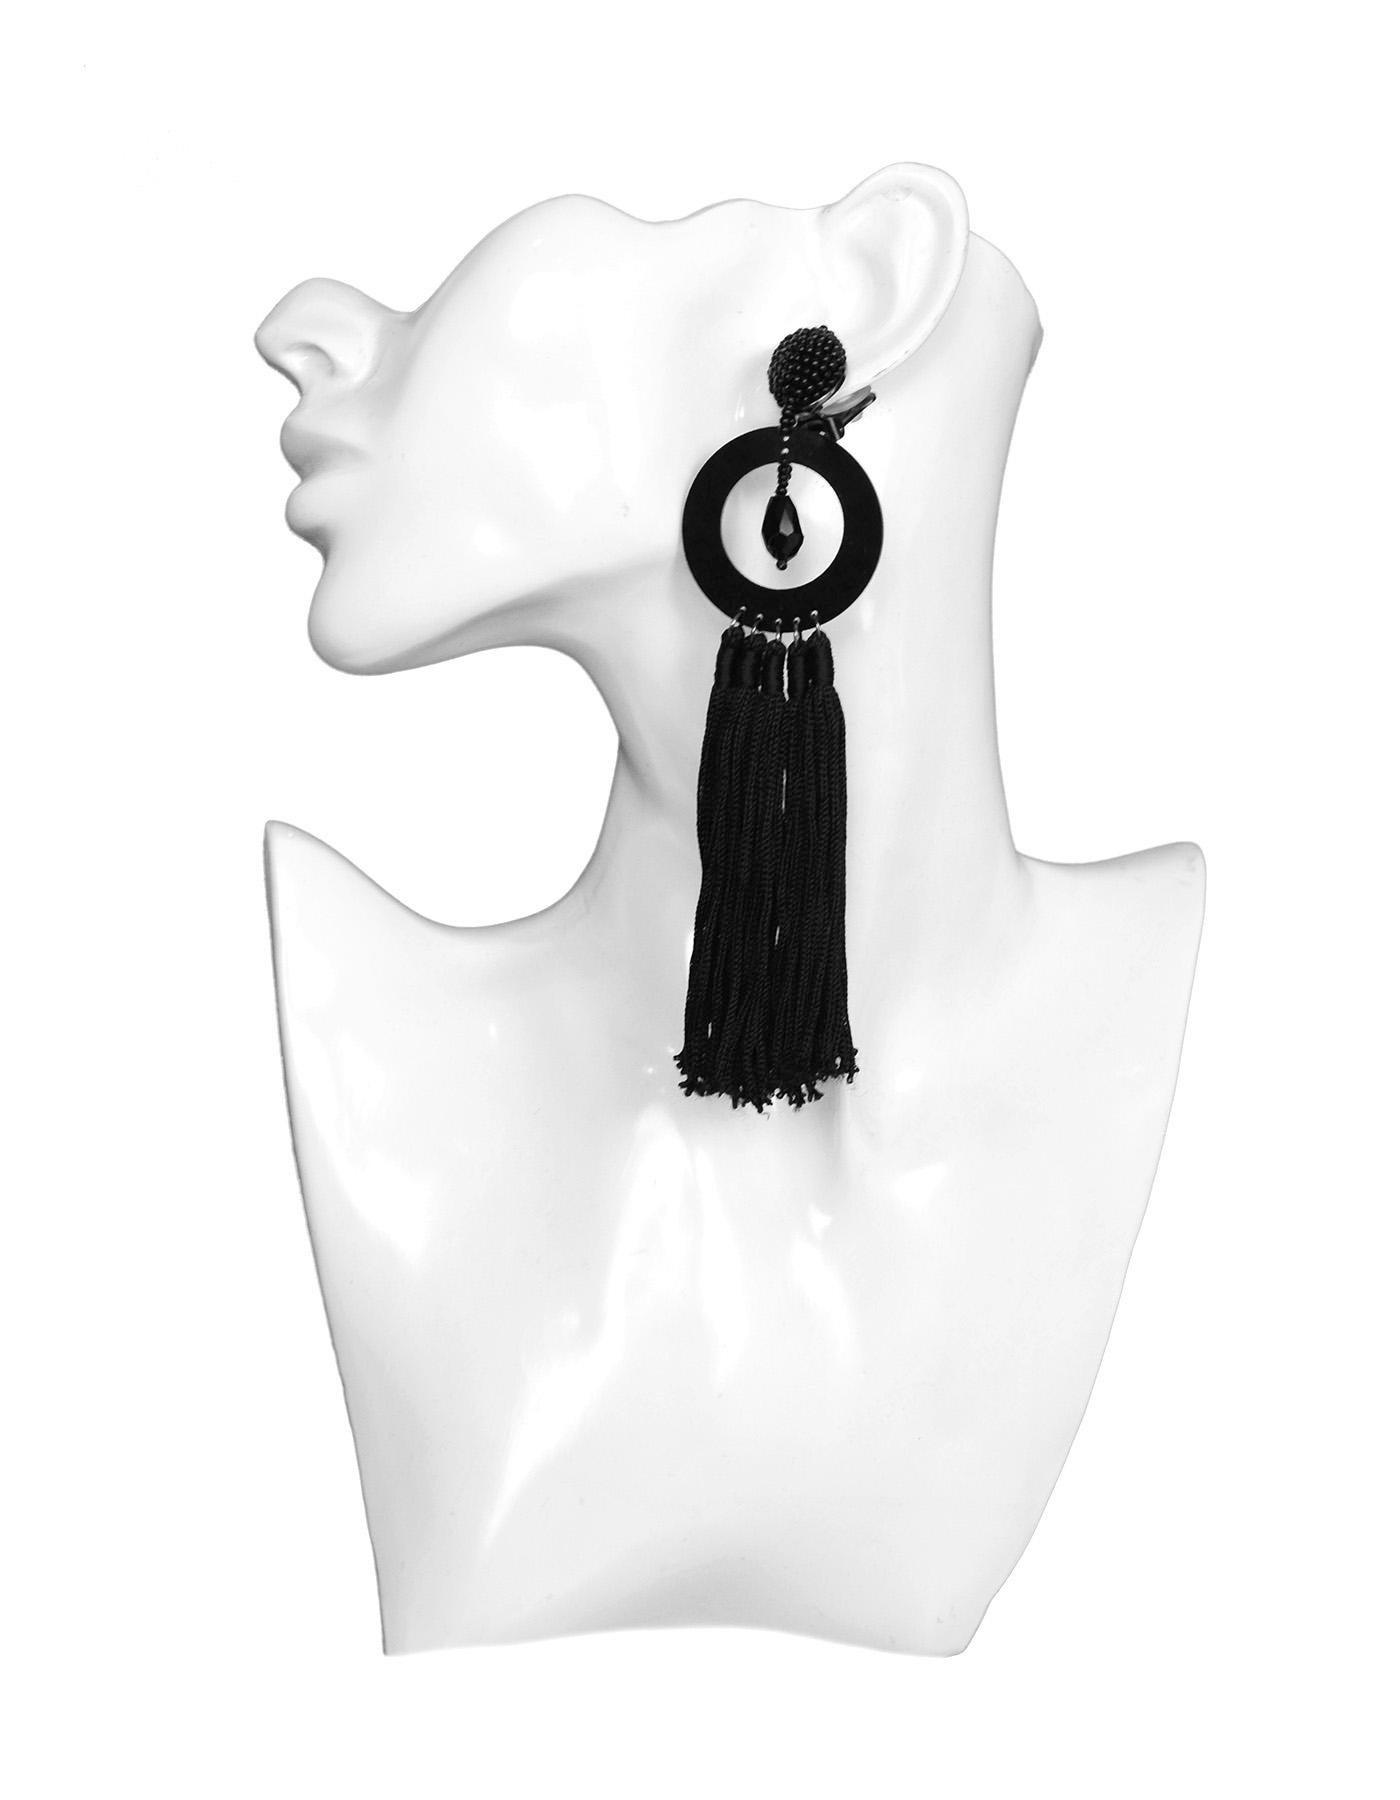 Oscar De La Renta Black Hanging Tassel Clip On Earrings

Made in: India
Color: Black
Materials:  Plastic and fabric
Hallmarks:   